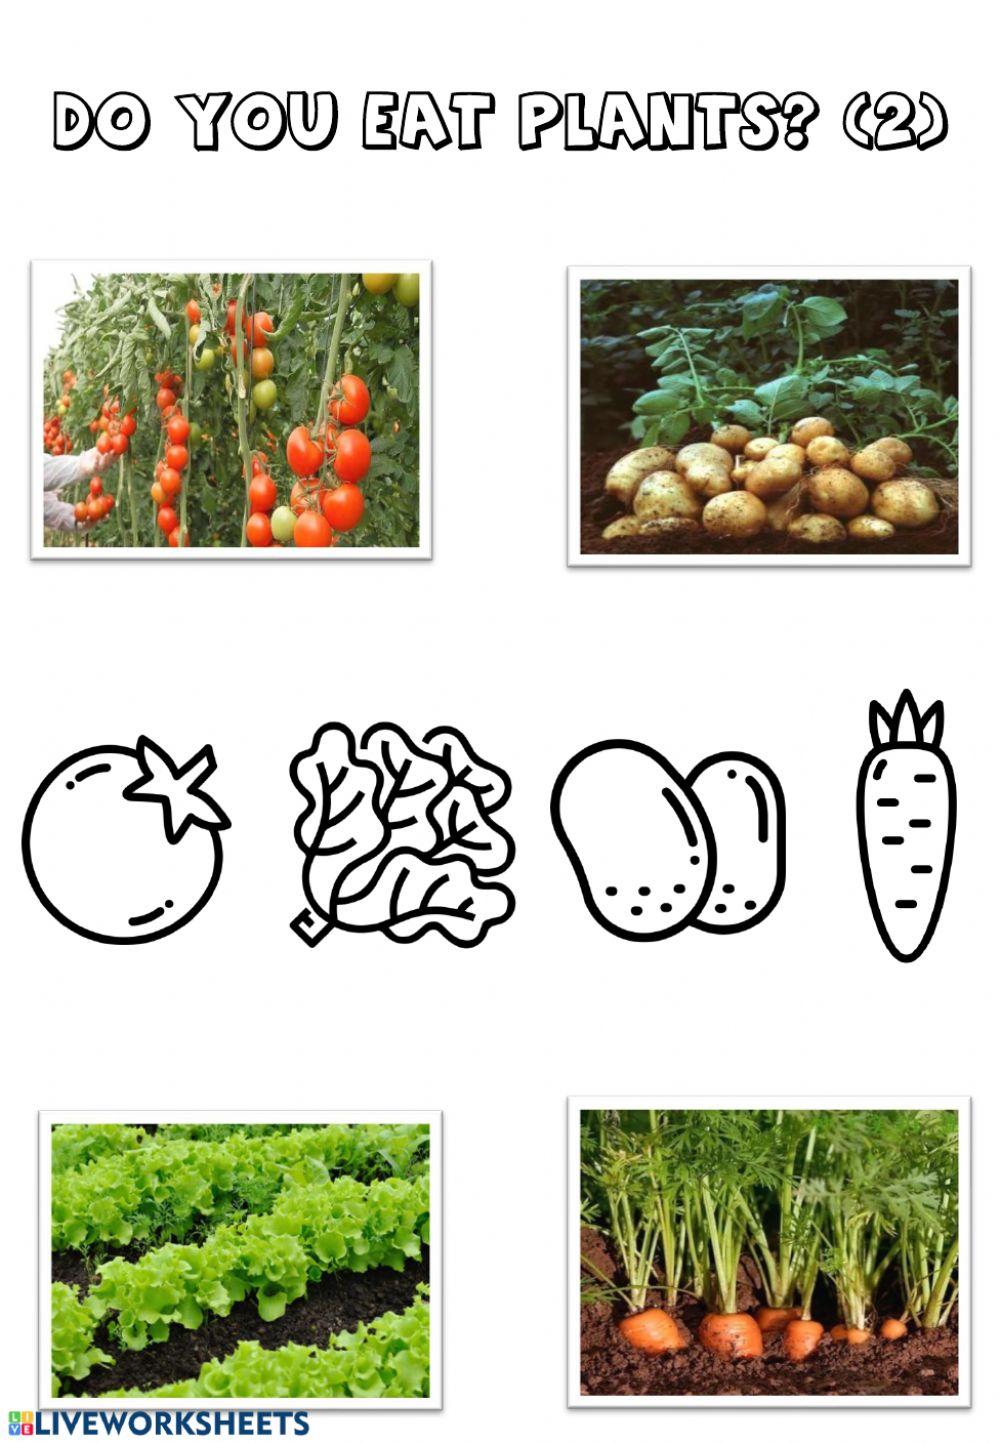 Do you eat plants? Vegetables